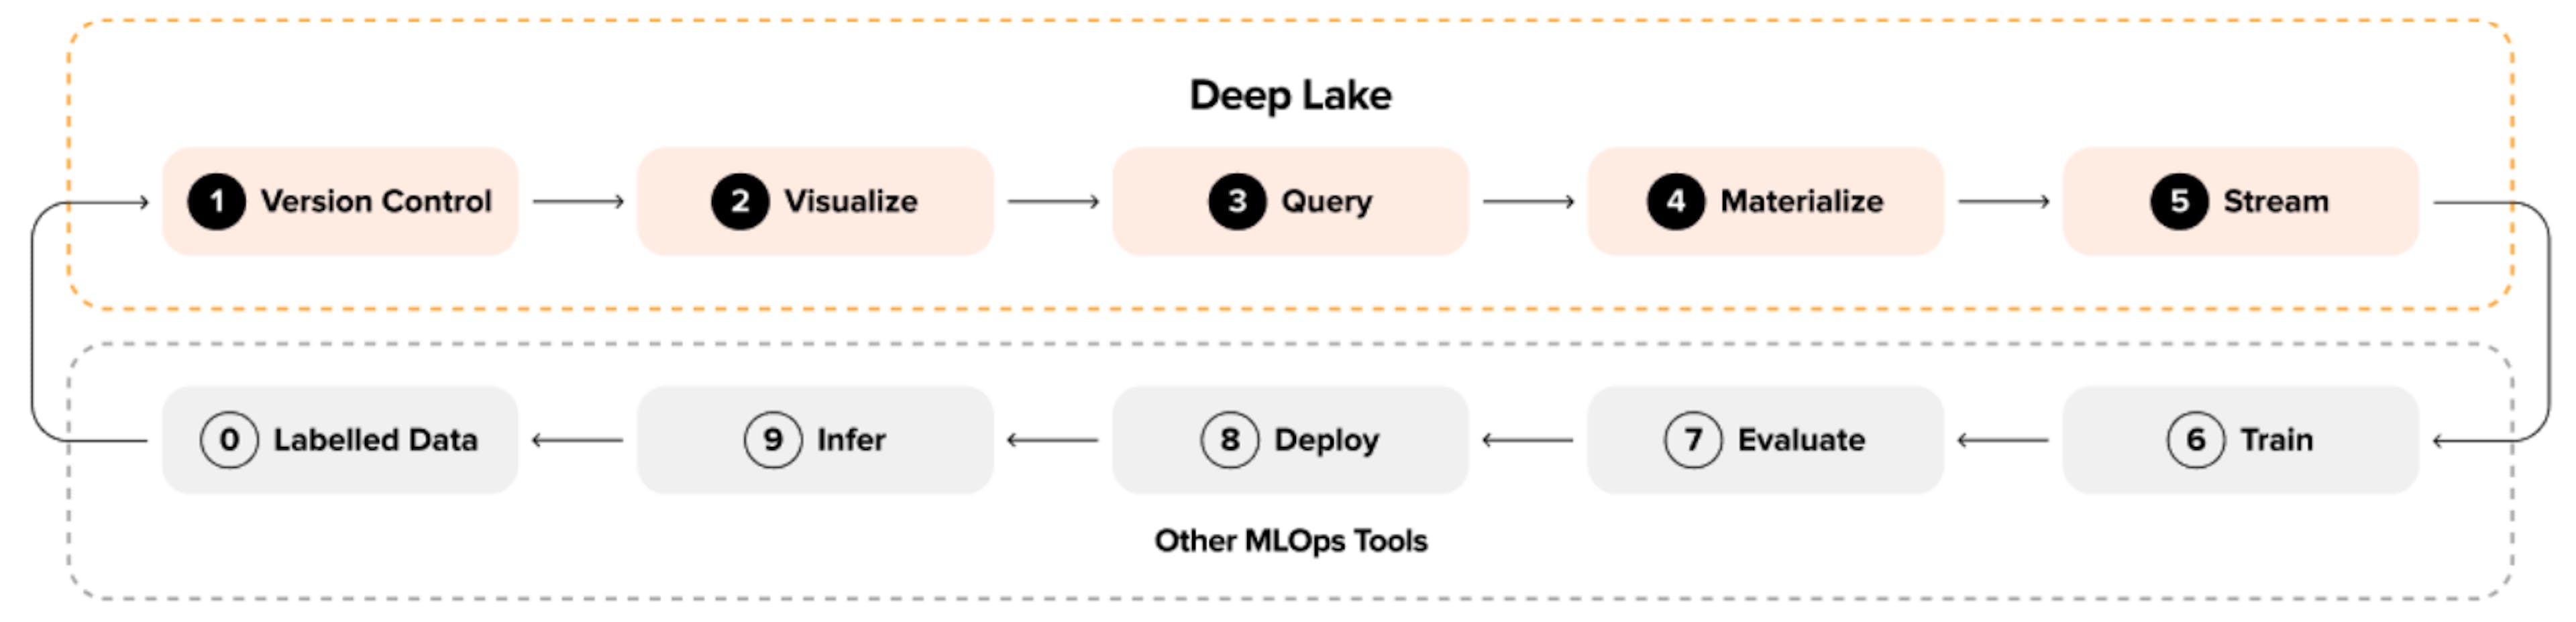 Figure 2: Machine Learning Loop with Deep Lake